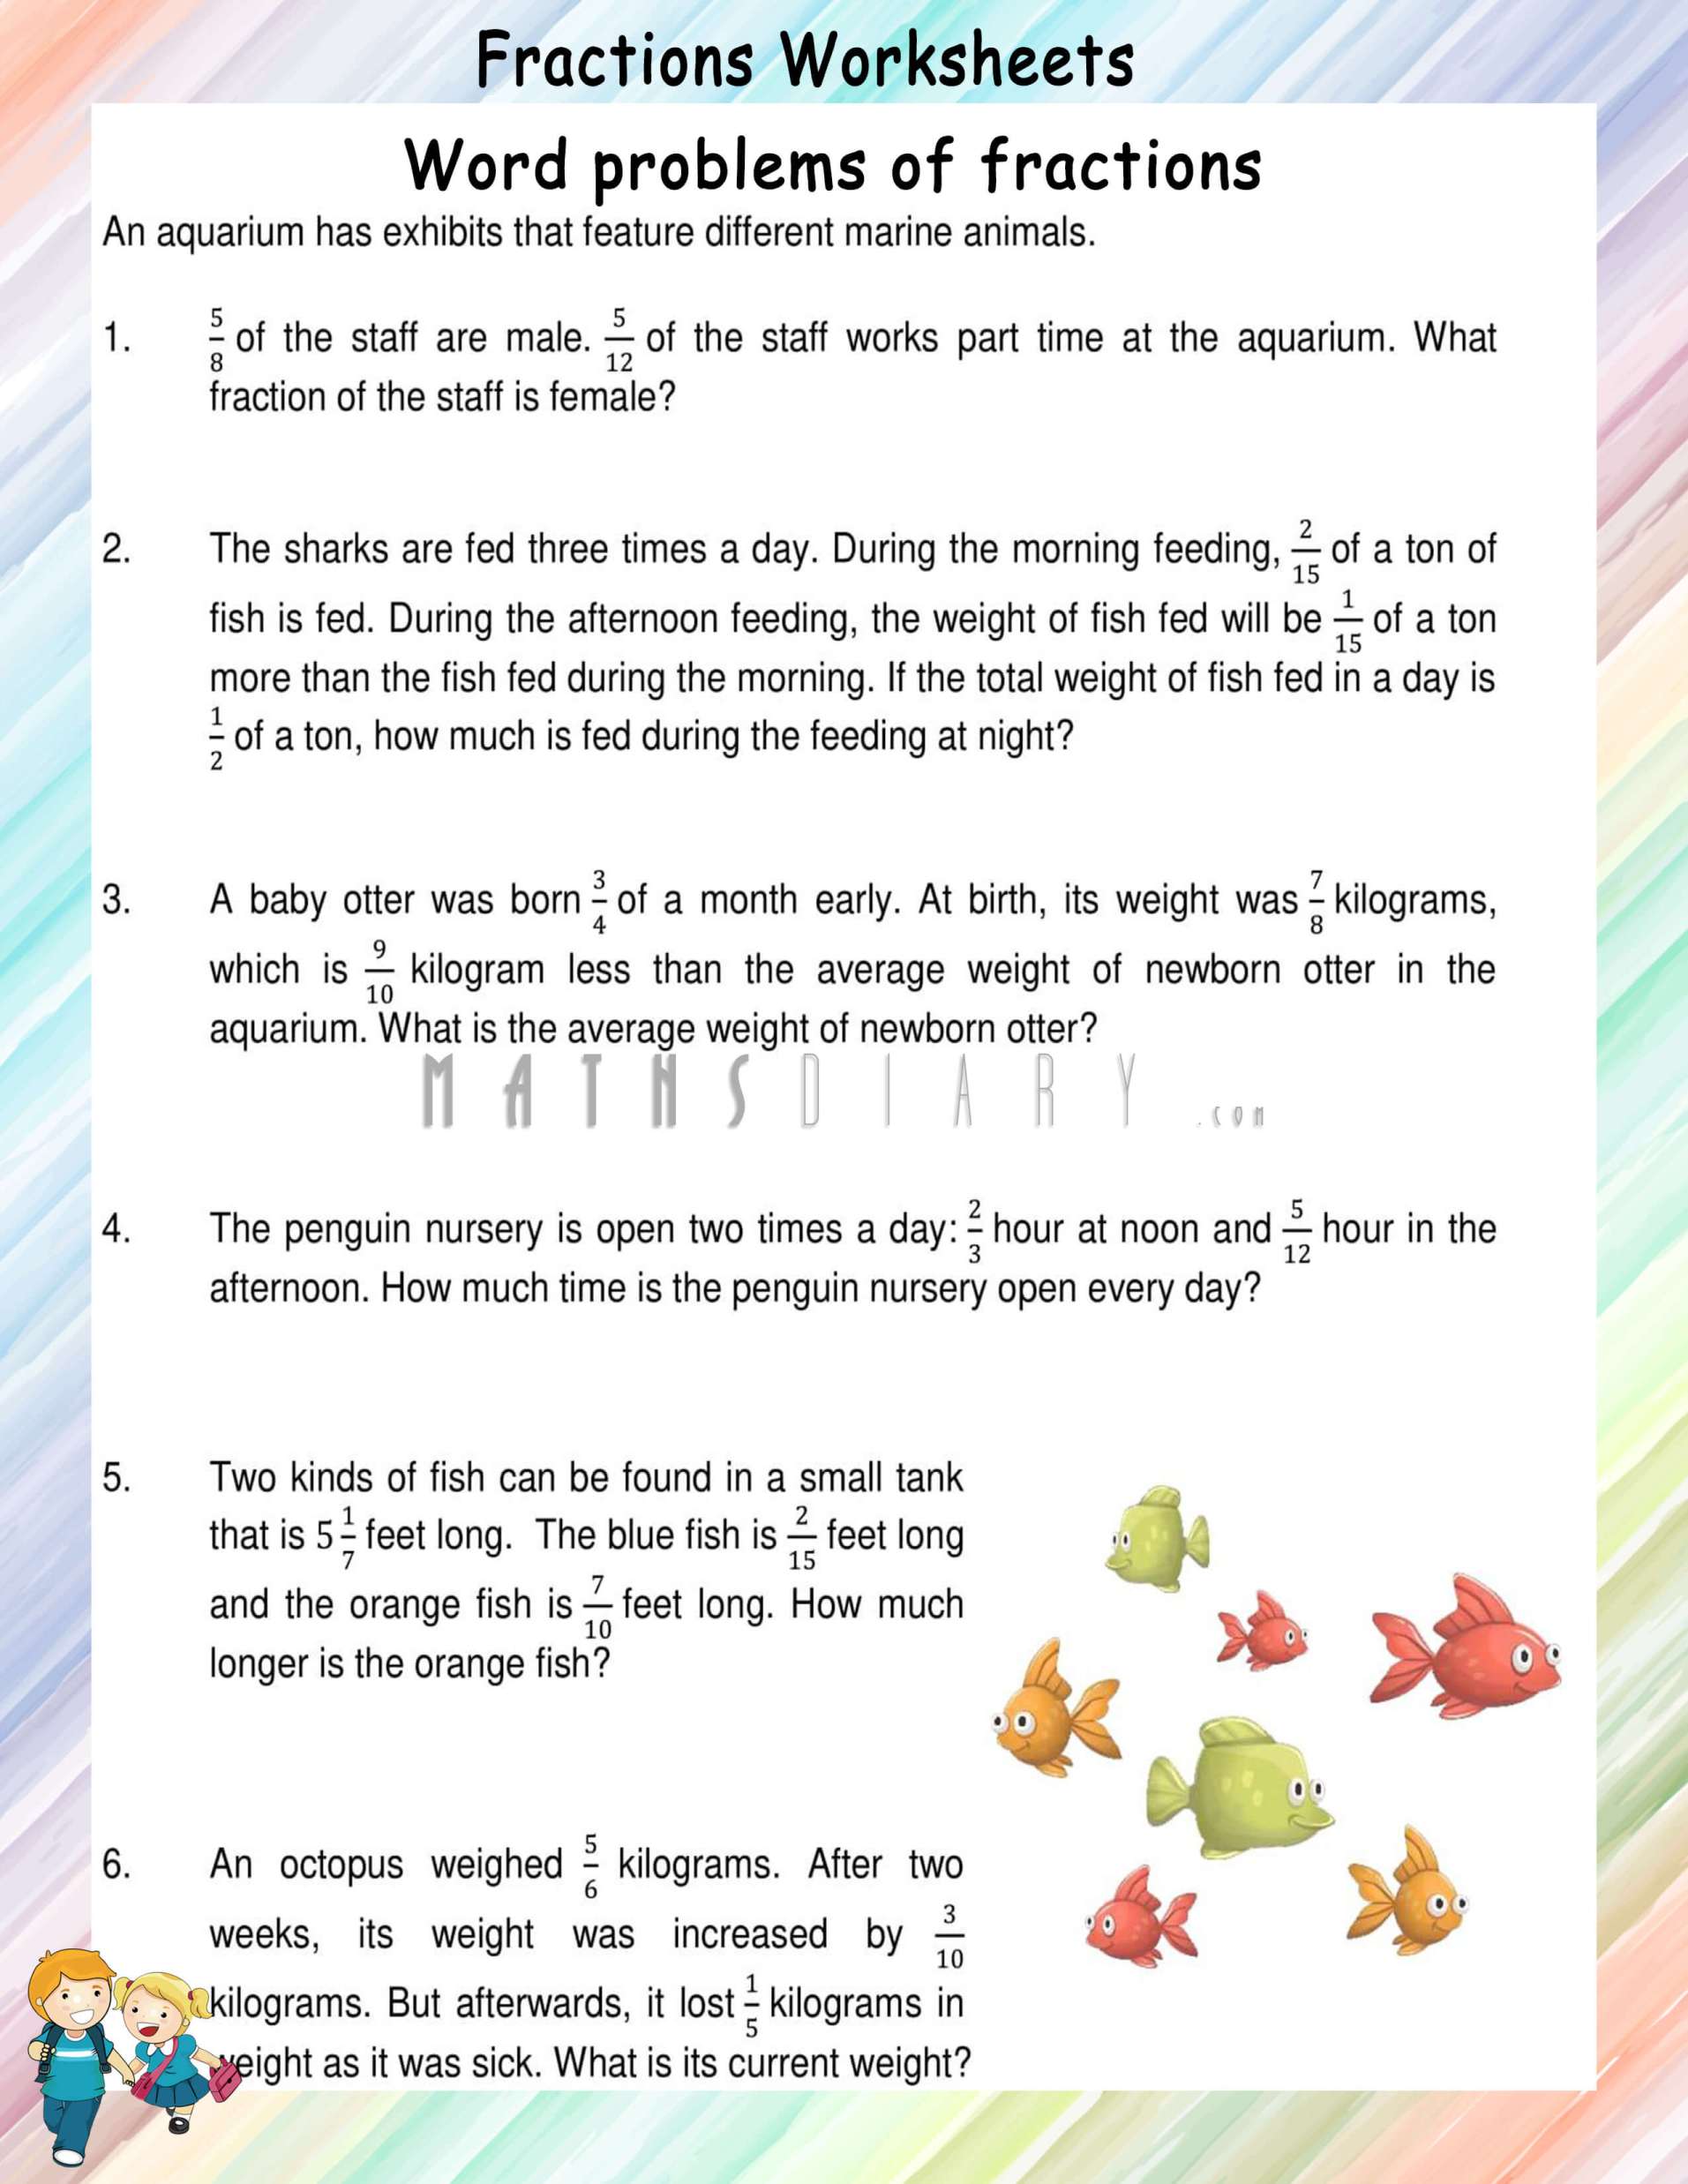 dividing-fractions-word-problems-worksheet